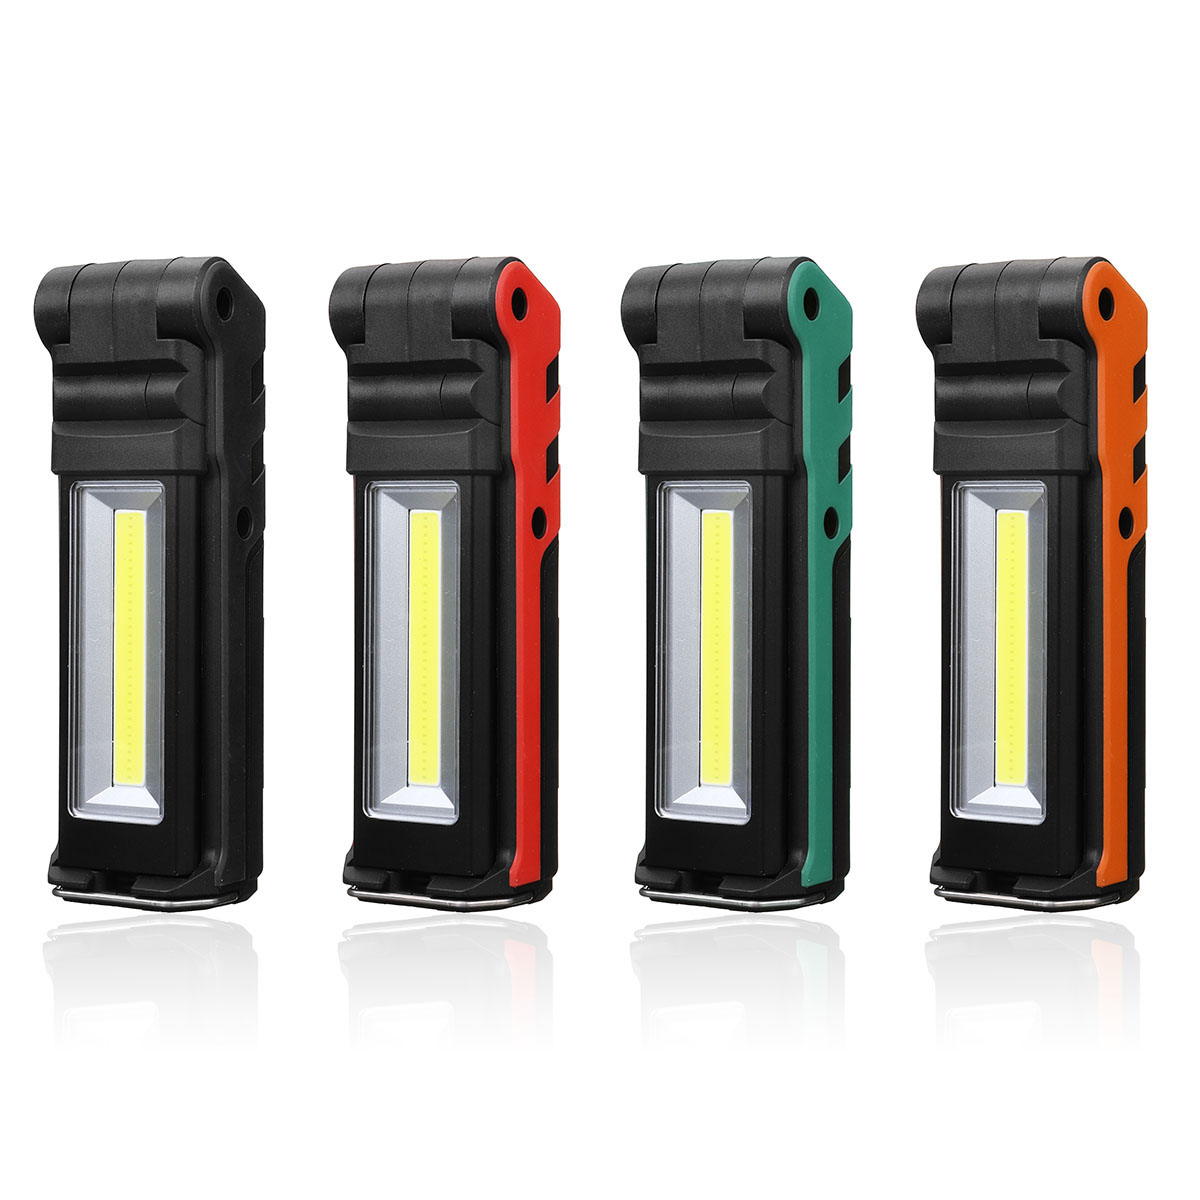 2LEDCOB-400LM-USB-Rechargeable-Foldable-Car-Maintenance-Light-Work-Light-LED-Flashlight-Power-Bank-1632766